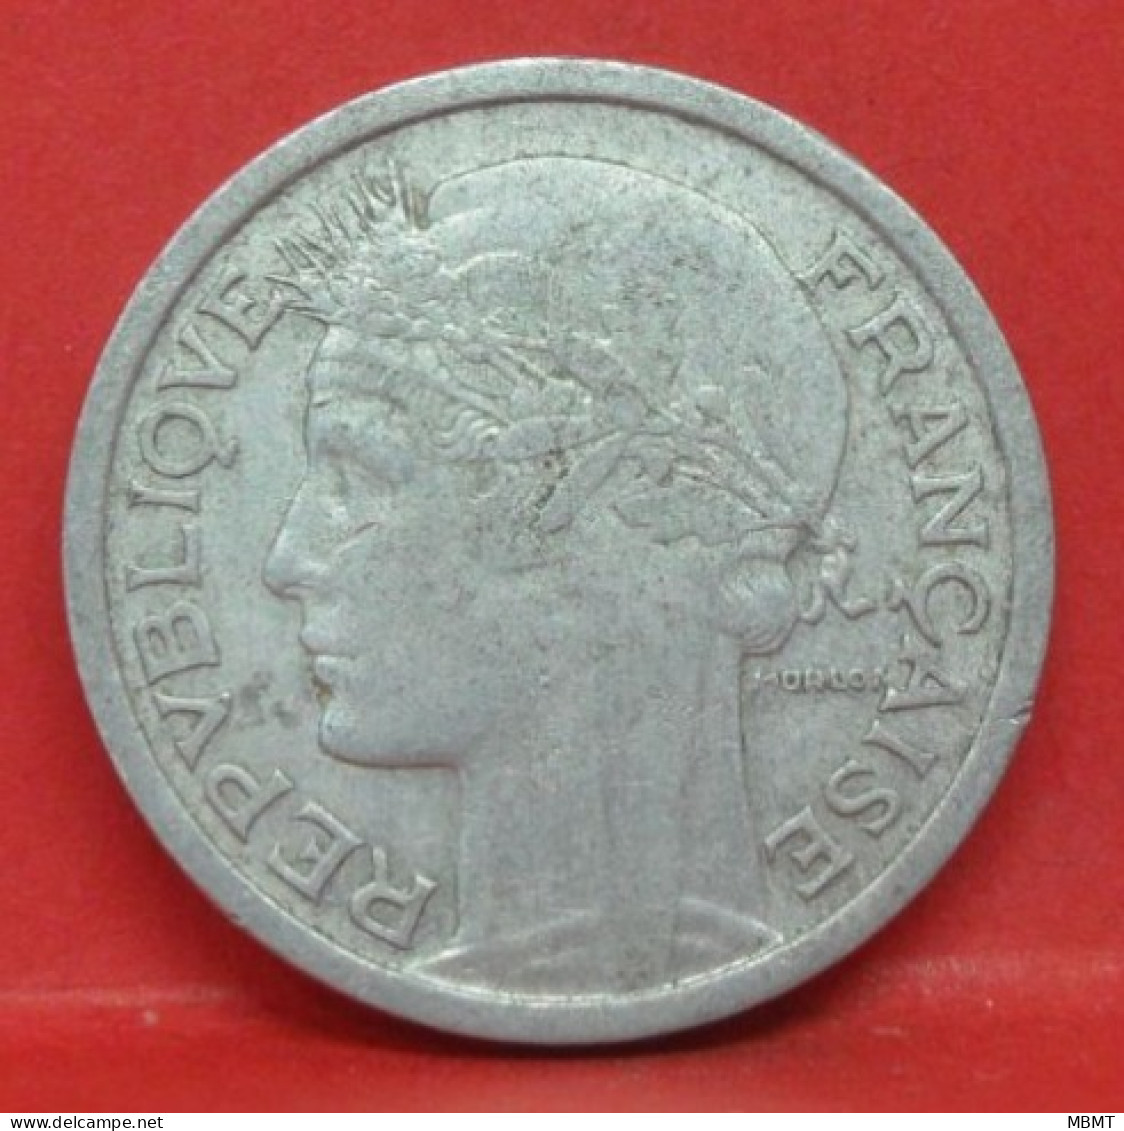 1 Franc Morlon Alu 1949 - TB - Pièce Monnaie France - Article N°676 - 1 Franc